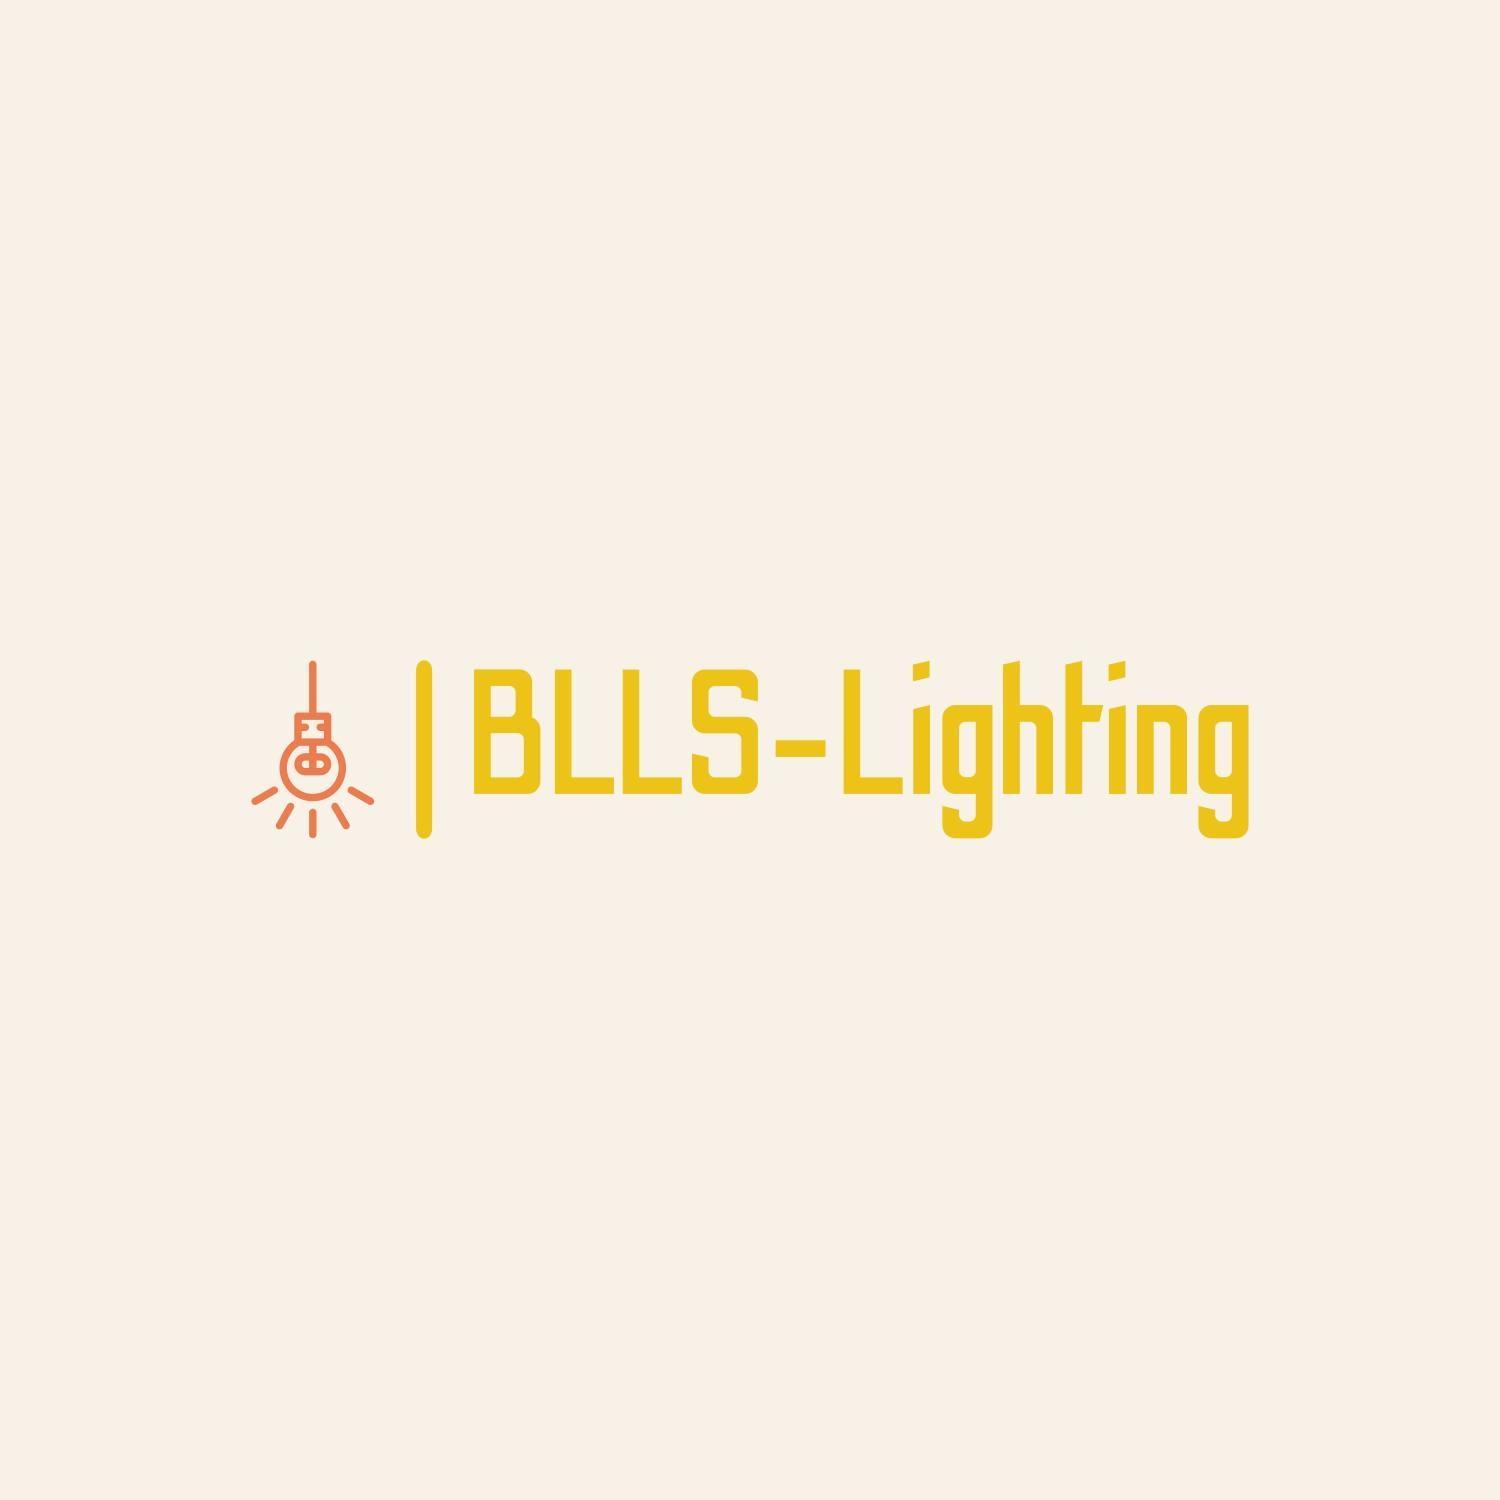 BLLS Lighting Your Hardscape Lighting